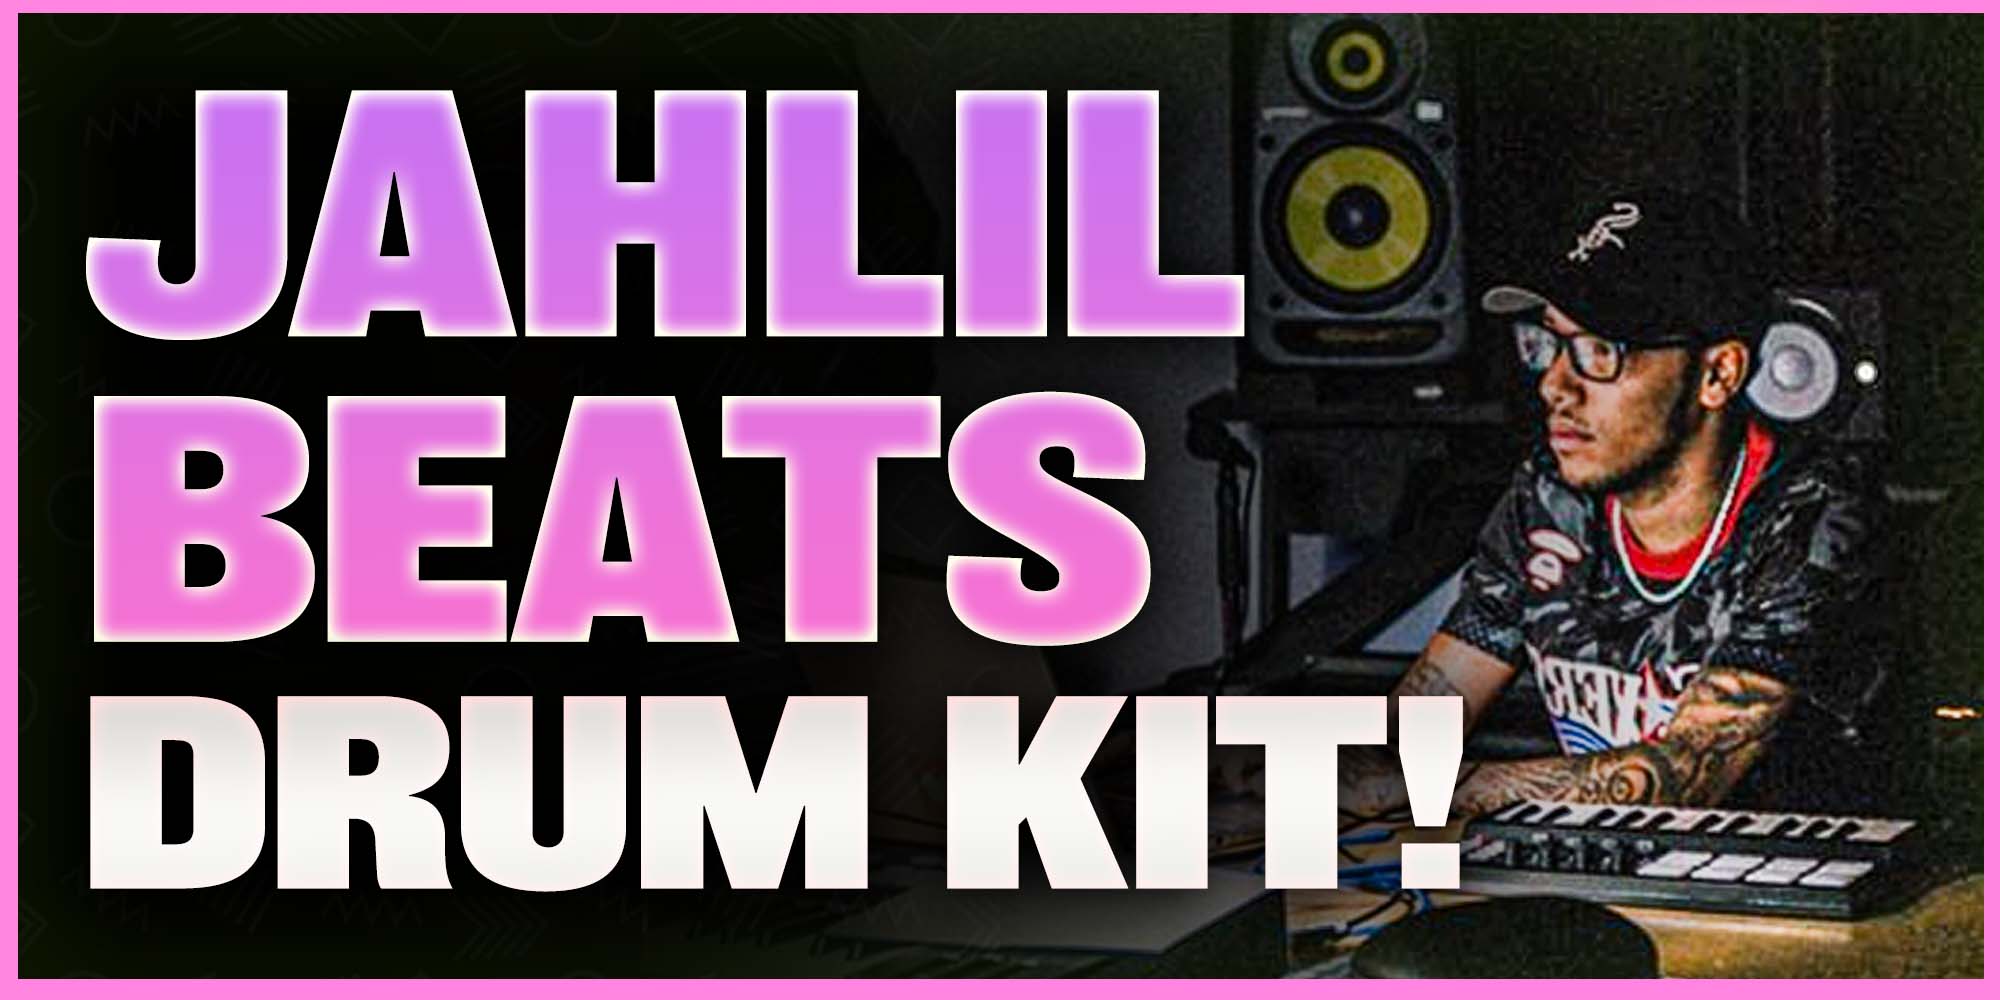 Jahlil Beats Drum Kit